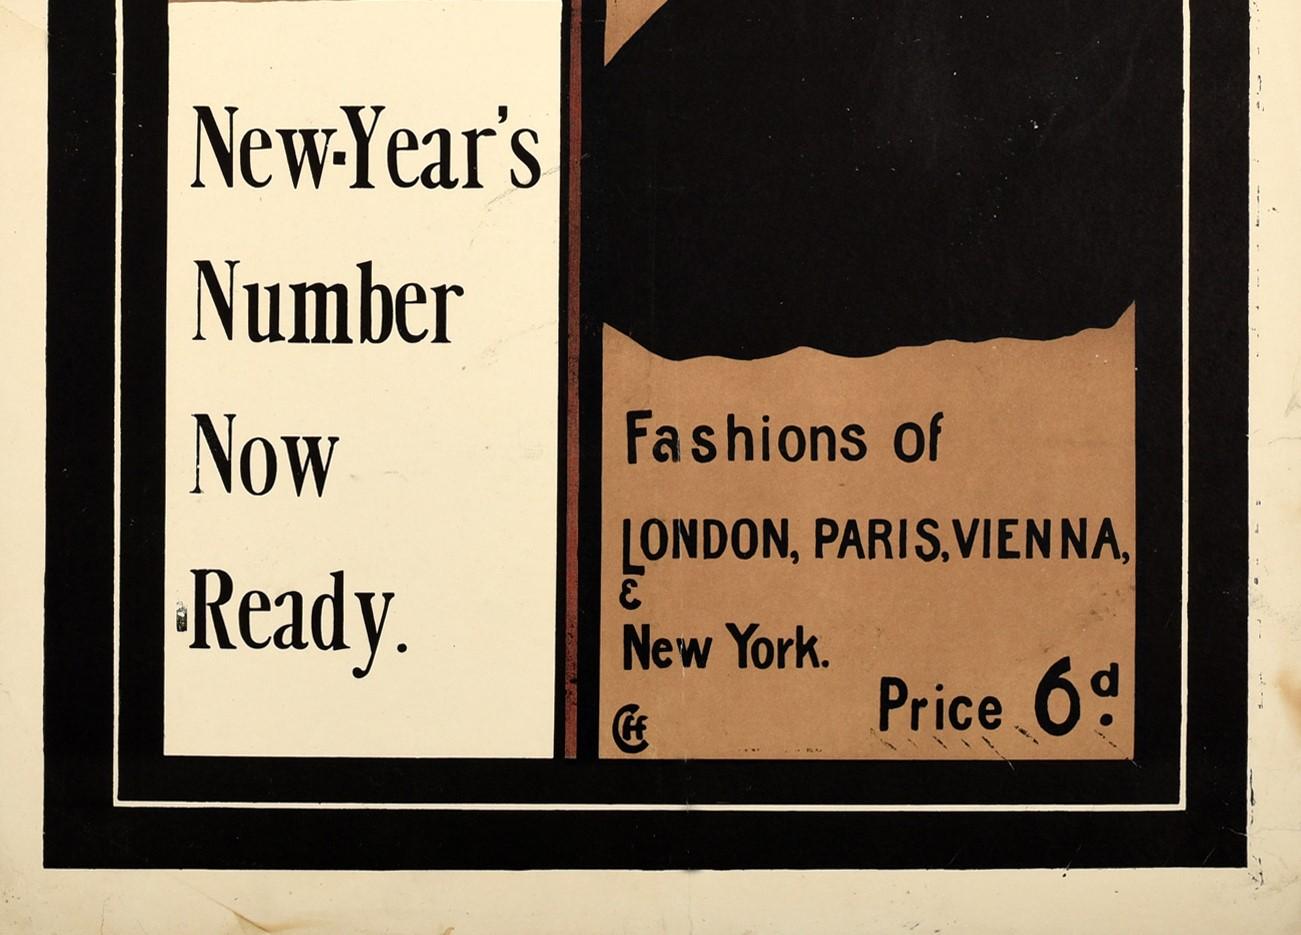 British Original Antique Poster The World Of Dress Fashion London Paris Vienna New York For Sale